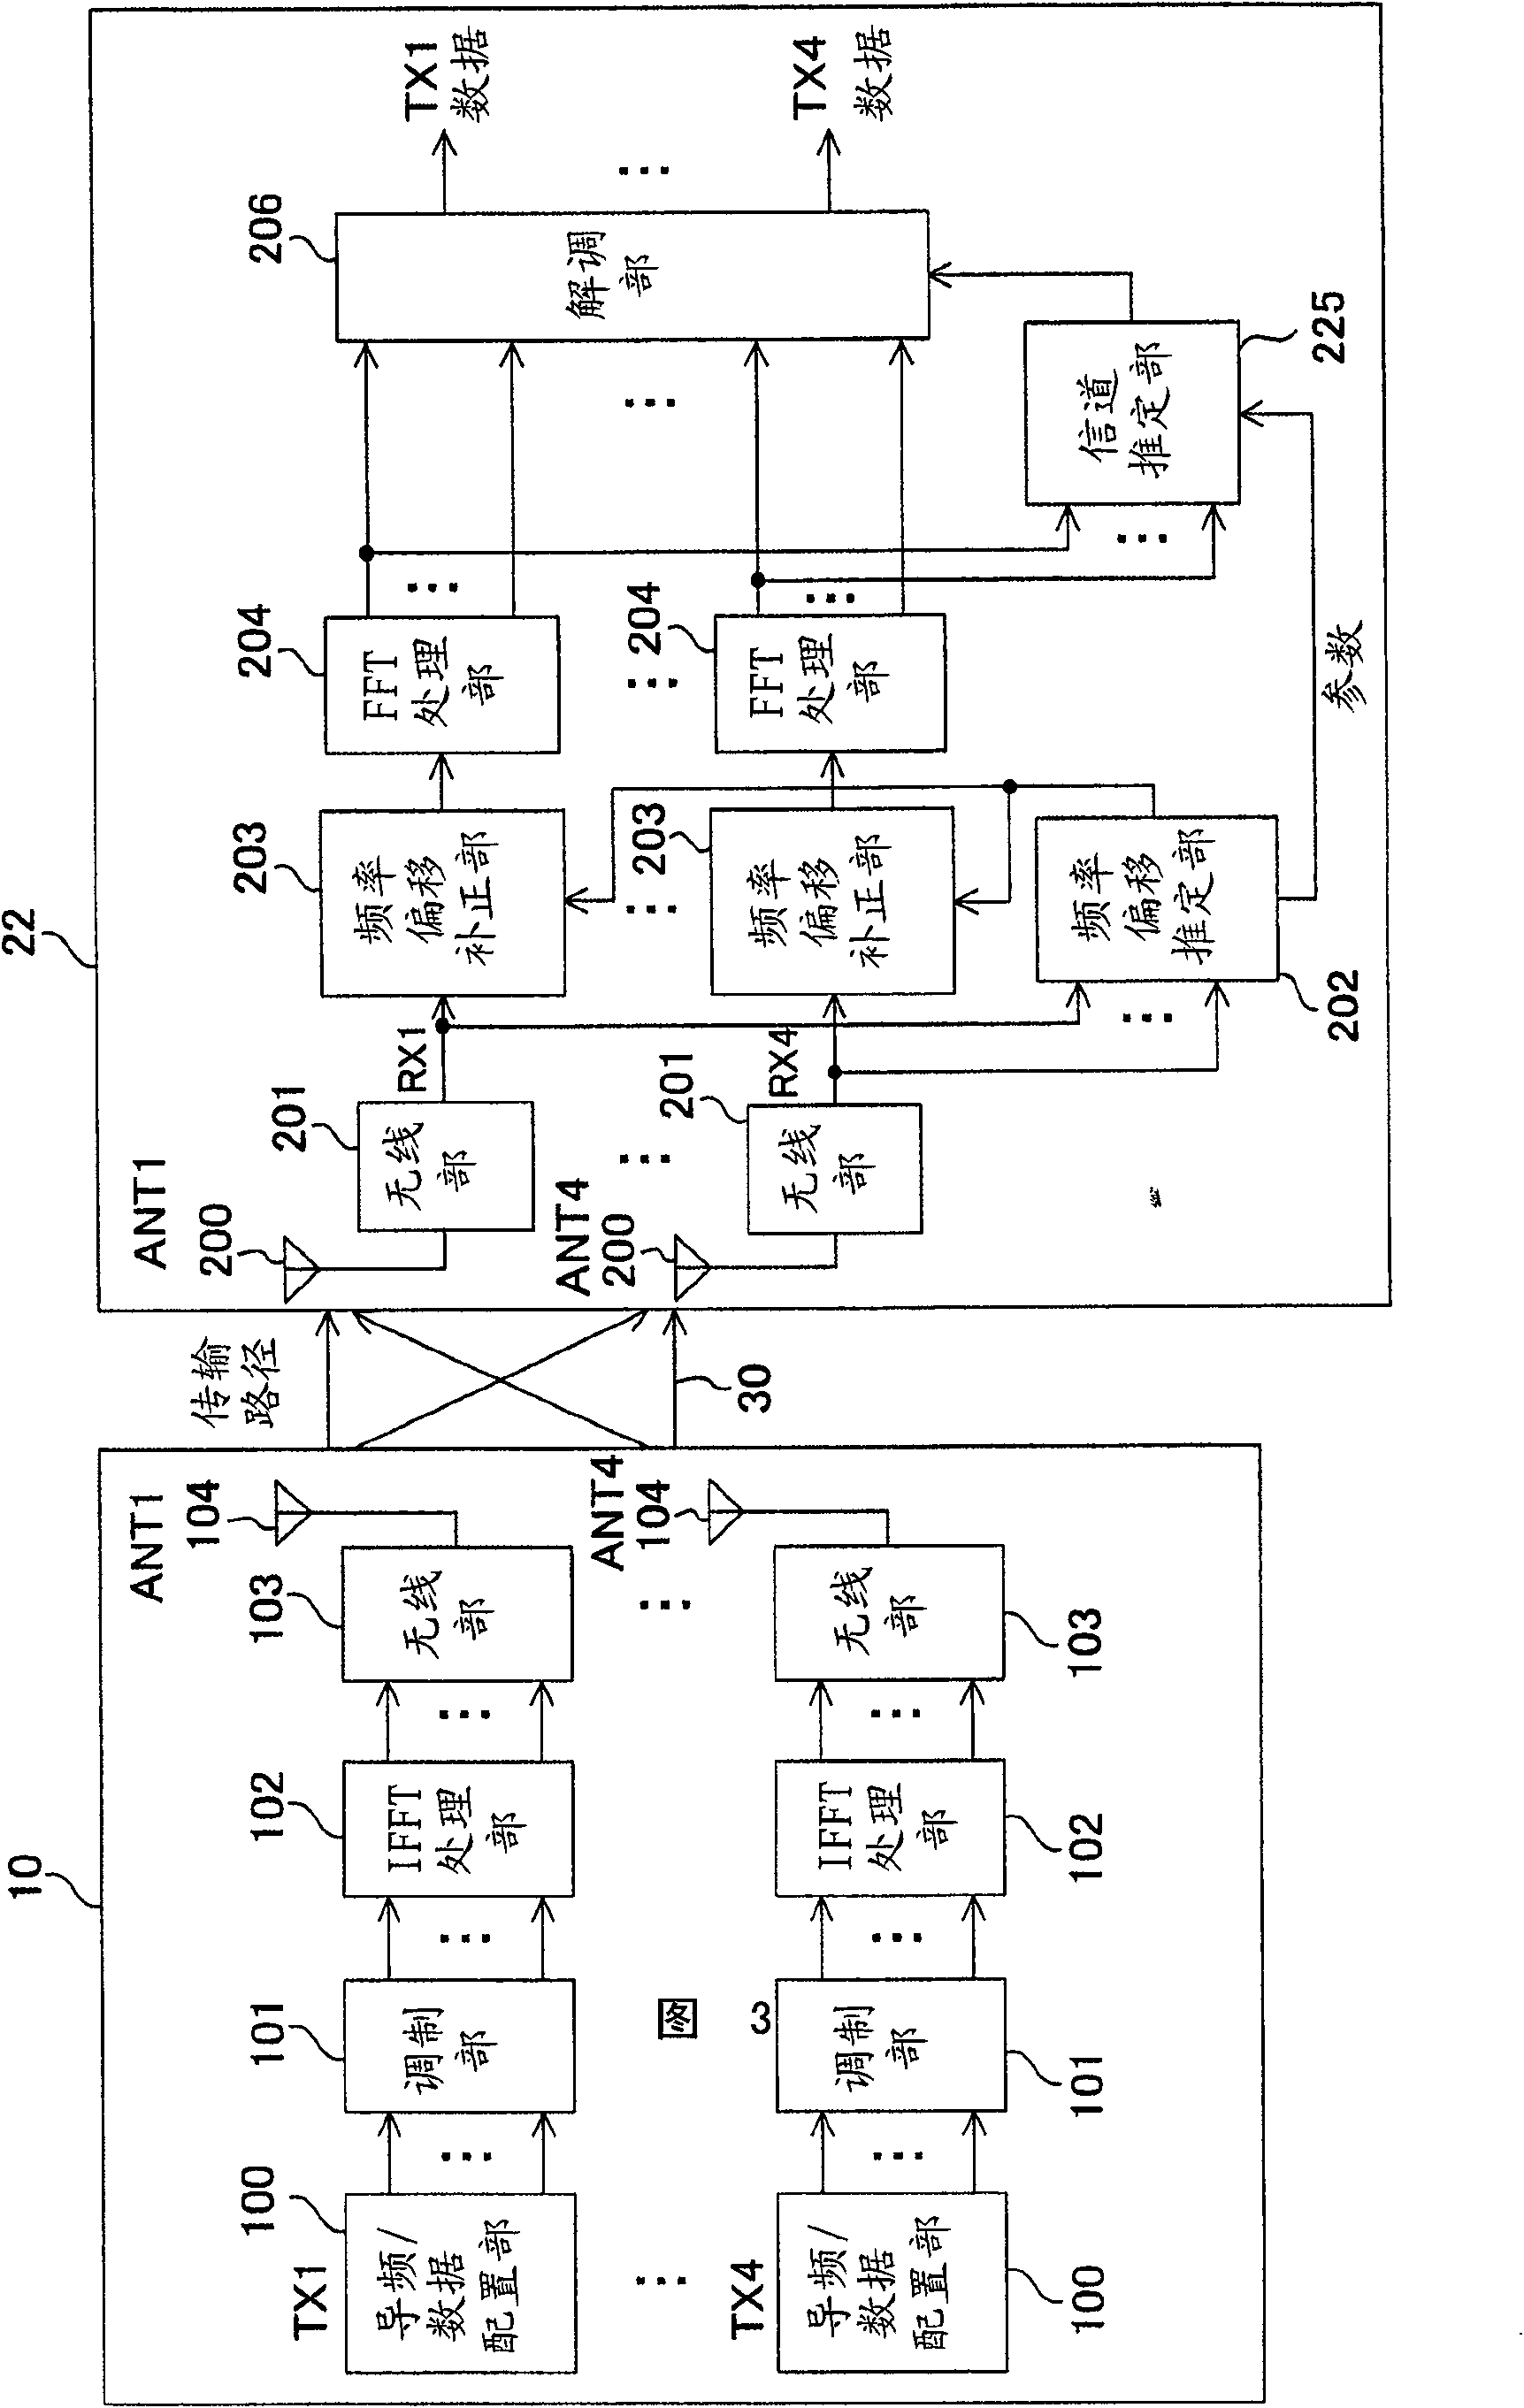 OFDM transmitter and OFDM receiver